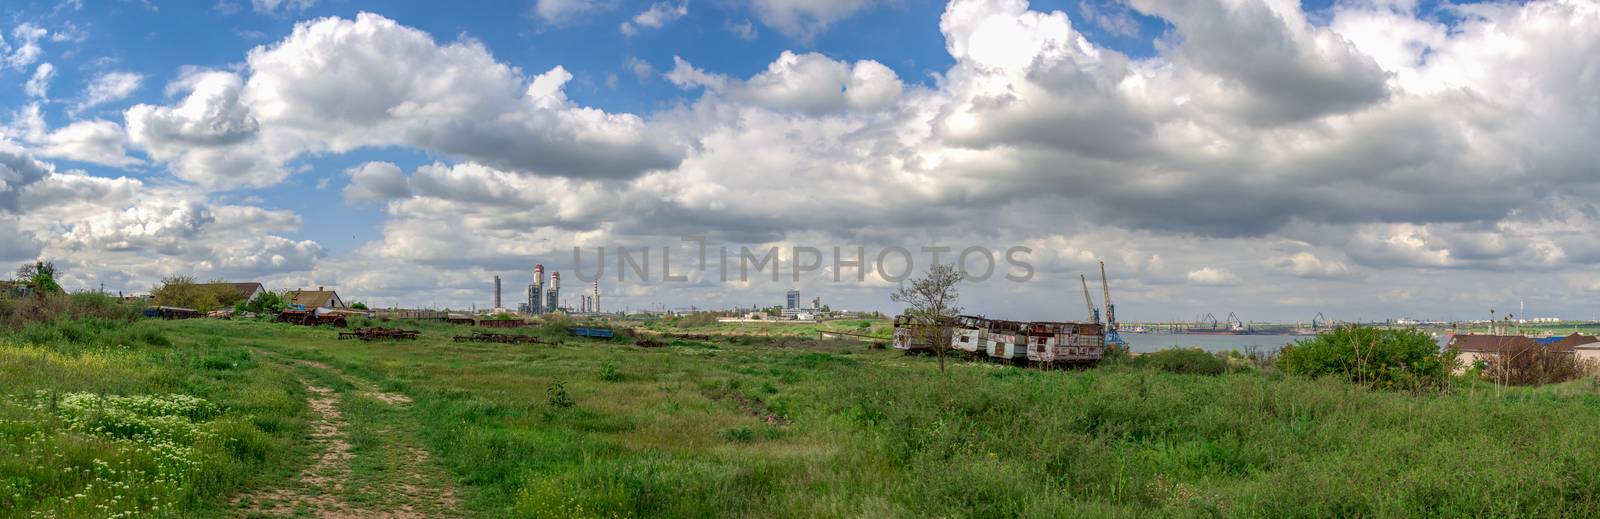 Odessa Port Plant in Ukraine by Multipedia